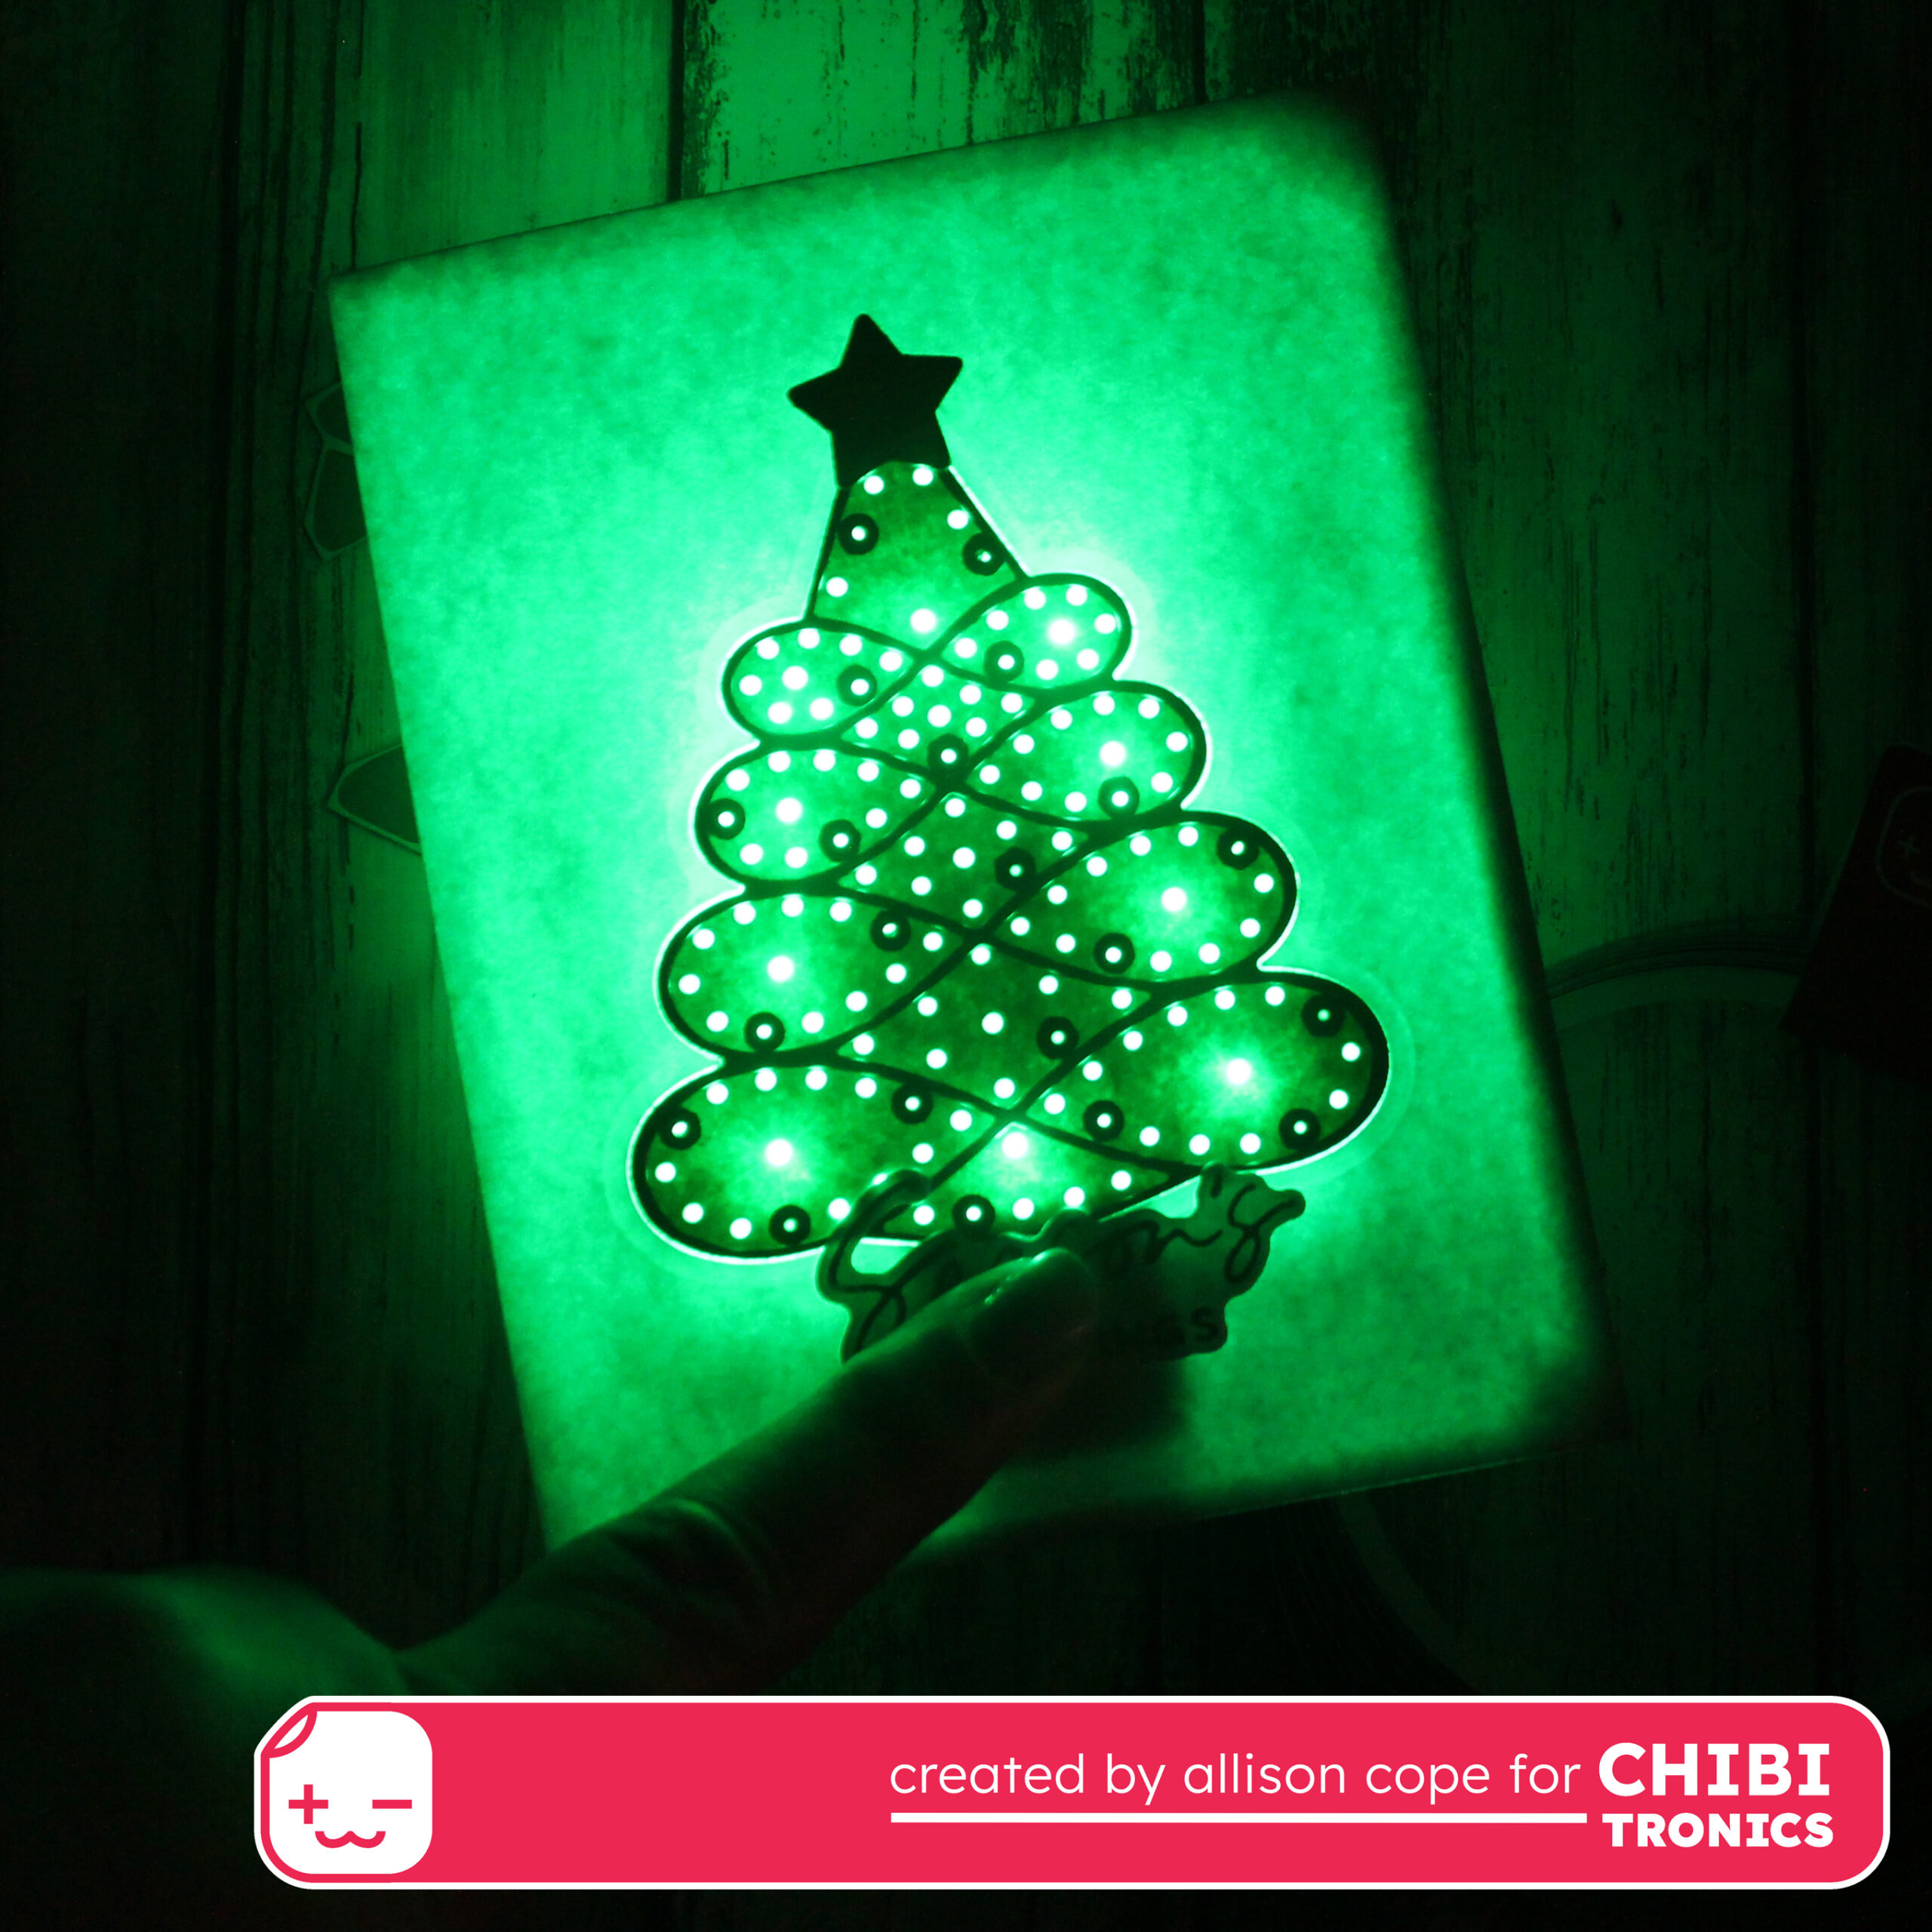 Light Up Christmas Tree Card featuring Chibitronics Green LED Lights